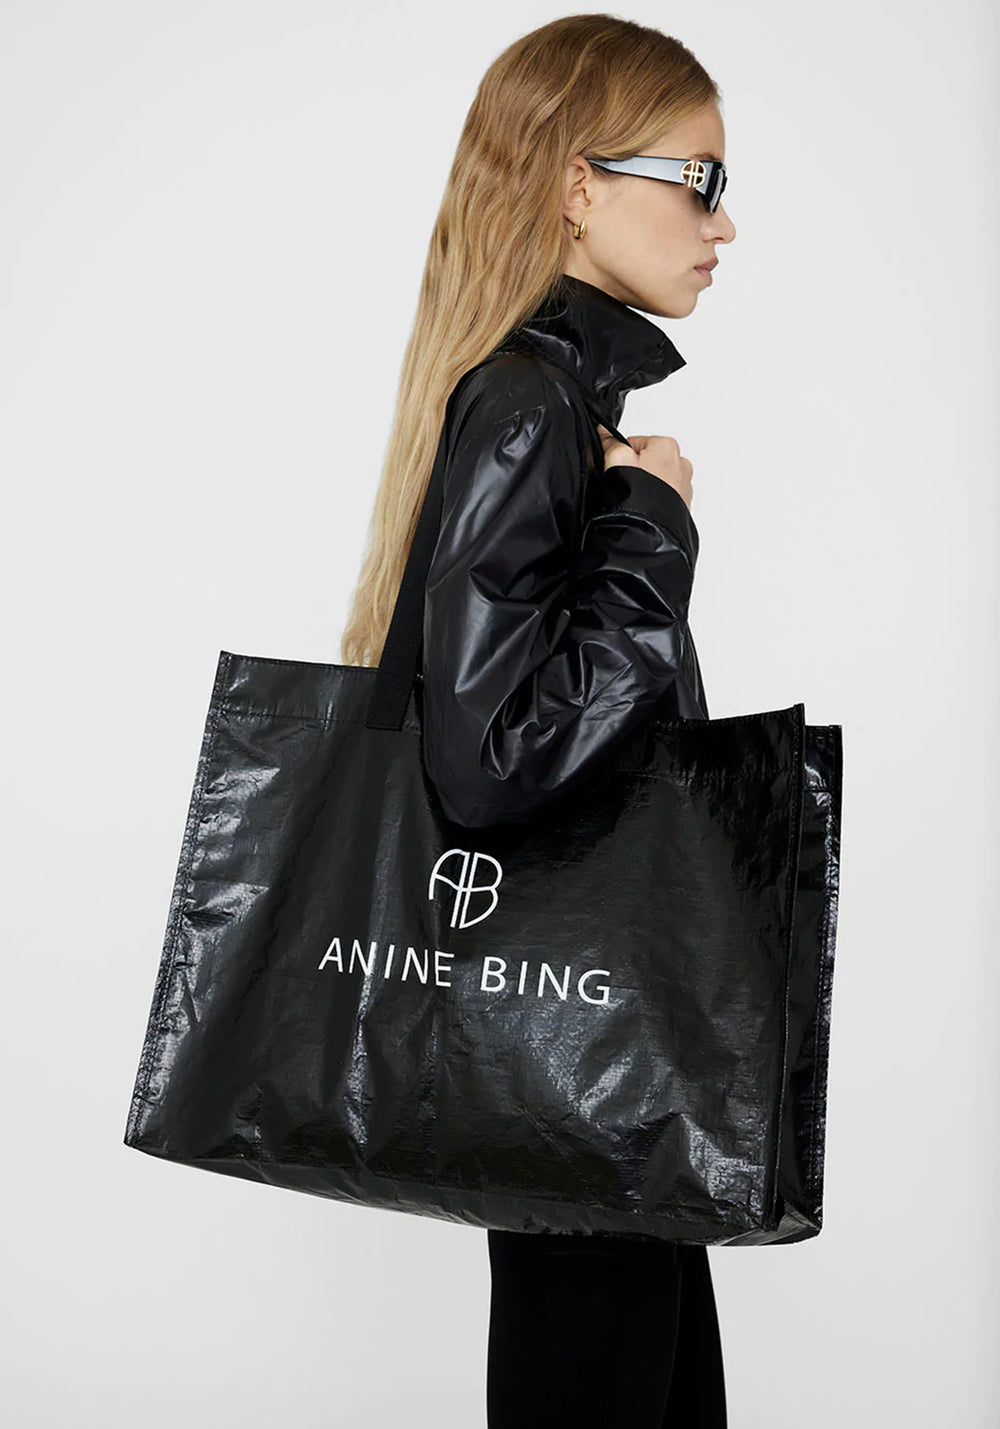 Anine Bing Large Rio Tote - Black and Natural Stripe